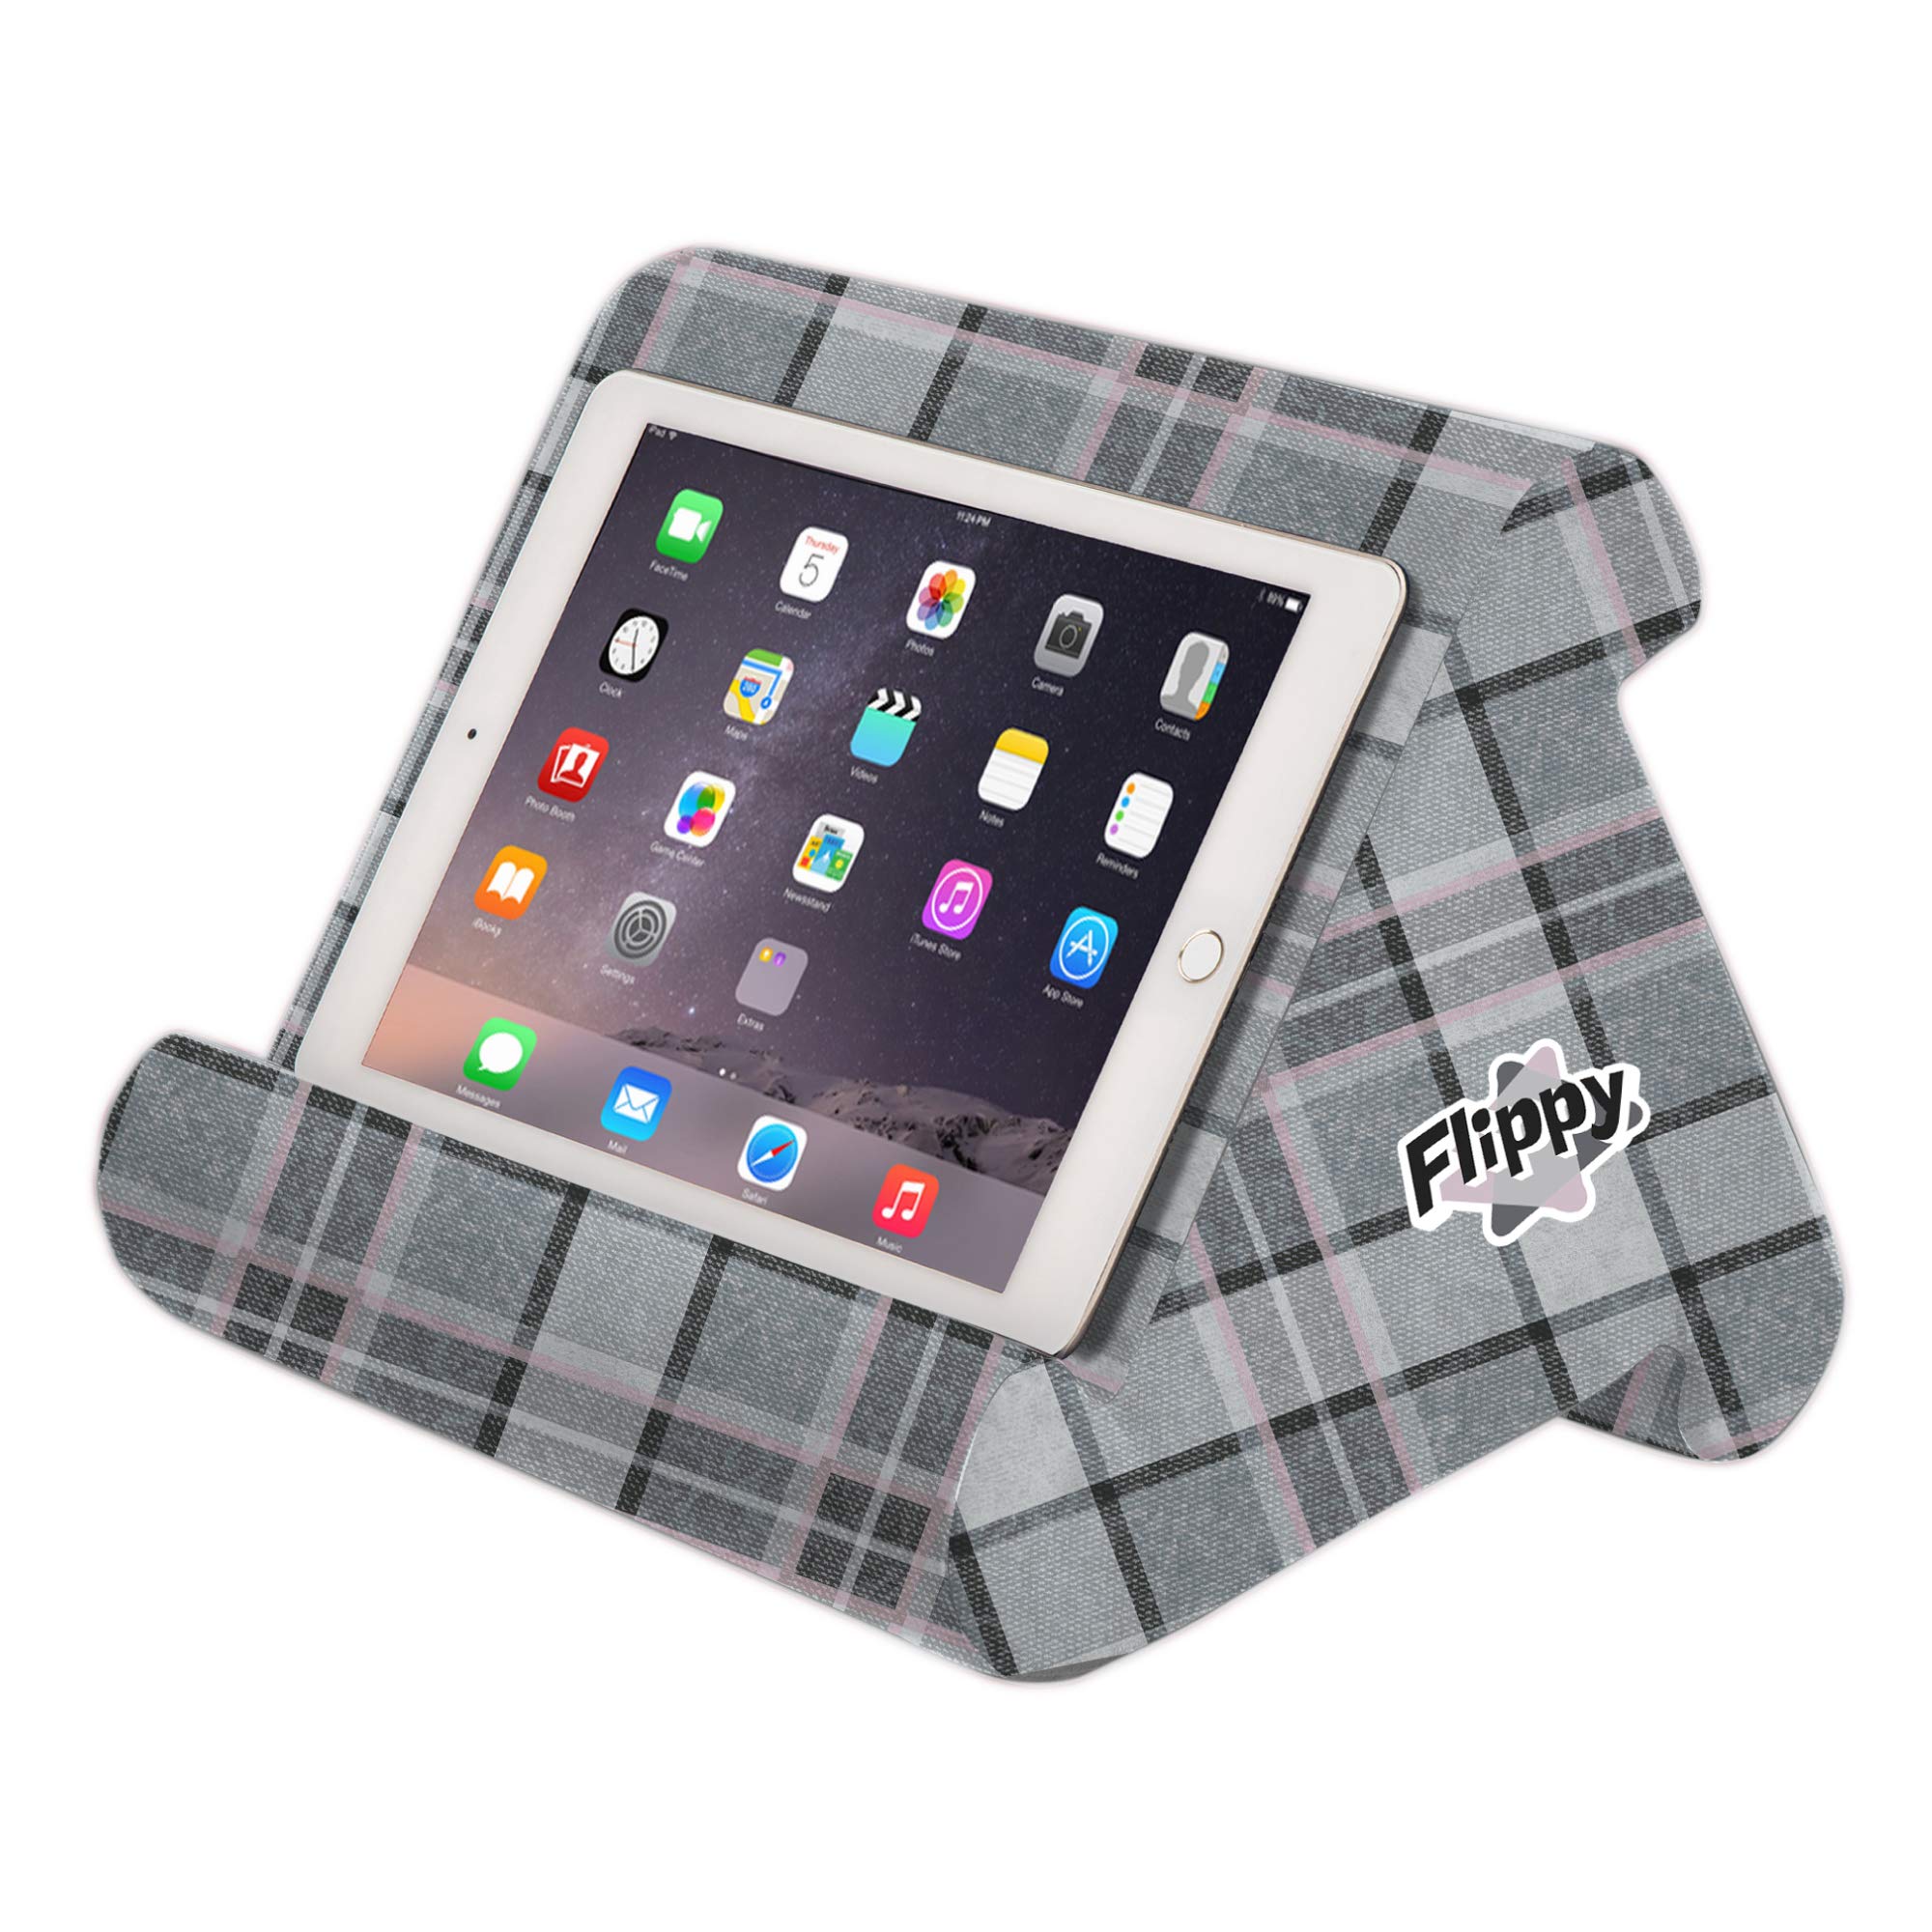 Tablet Holder stand Book Reading Bean bag Cushion pillow soft freestanding  Home | eBay